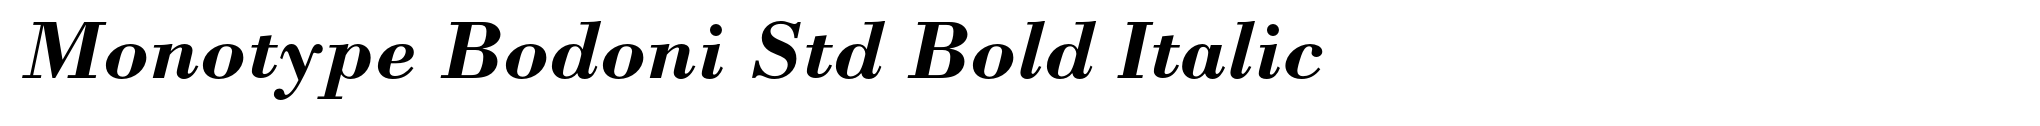 Monotype Bodoni Std Bold Italic image